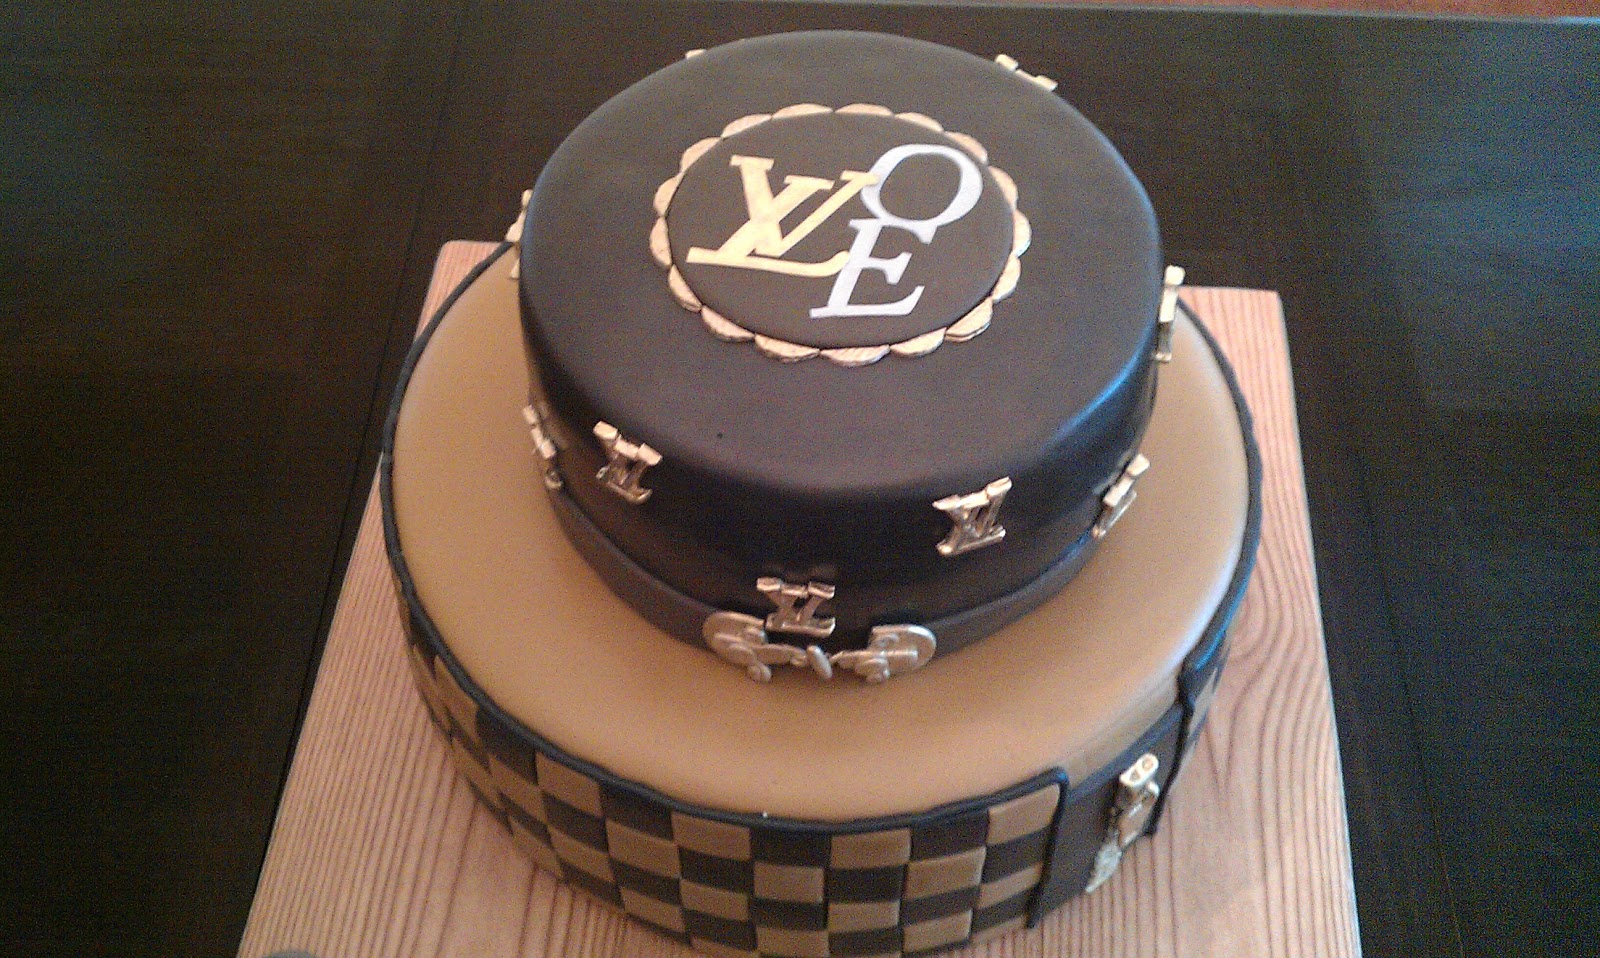 O'Creme Louis Vuitton Cake Decorating Stencil Cake Decorating Stencils 